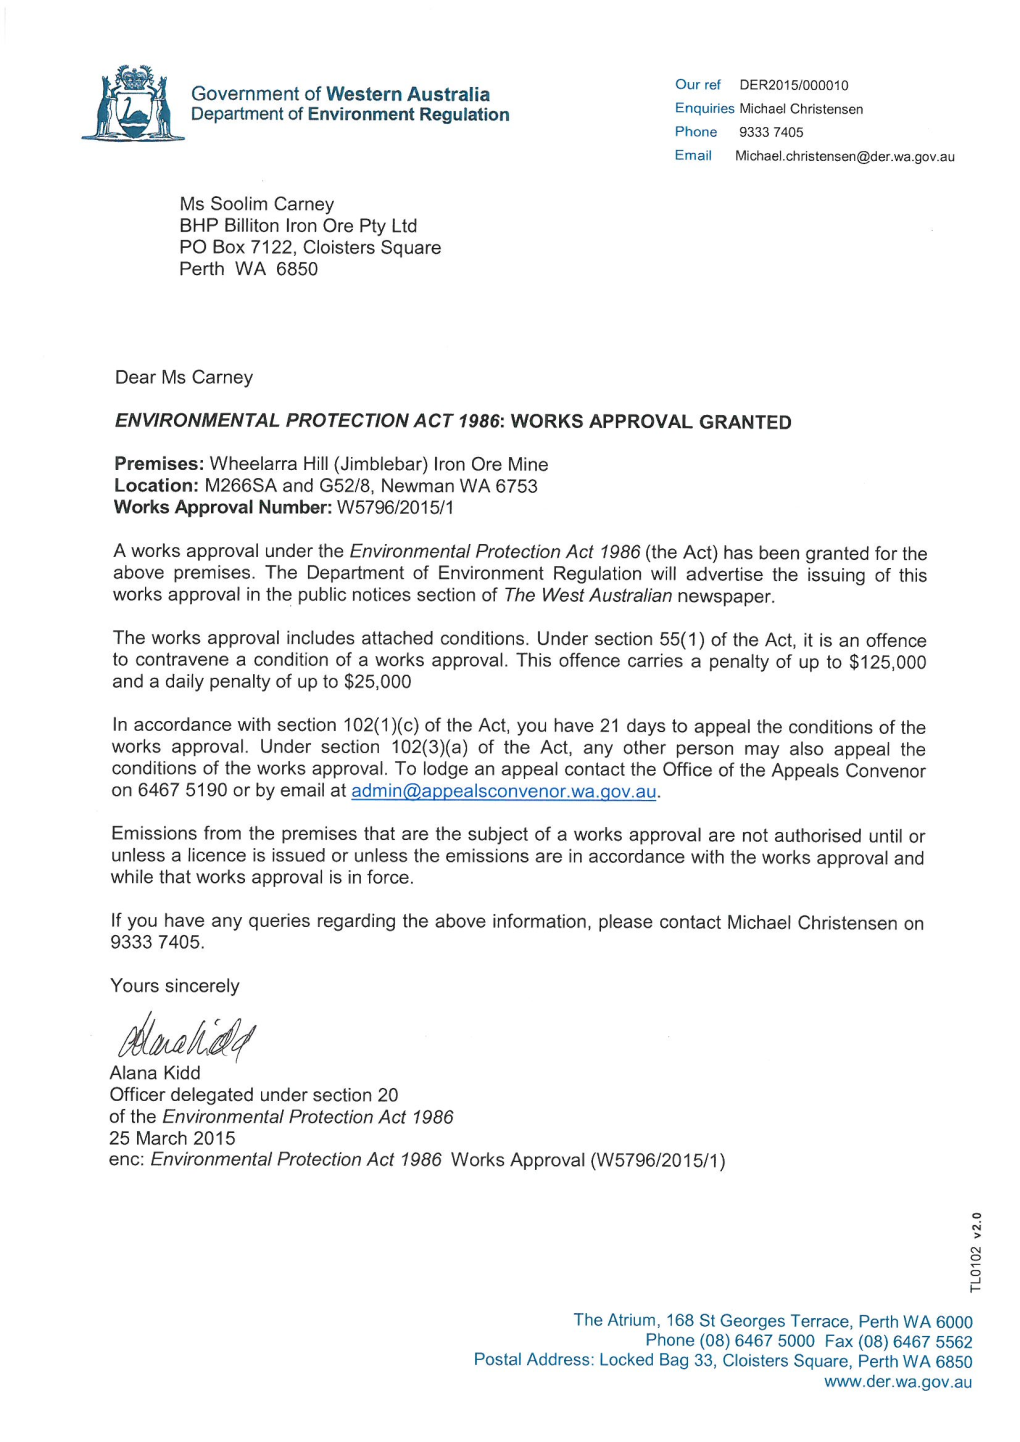 BHP Billiton Iron Ore Pty Ltd Works Approval